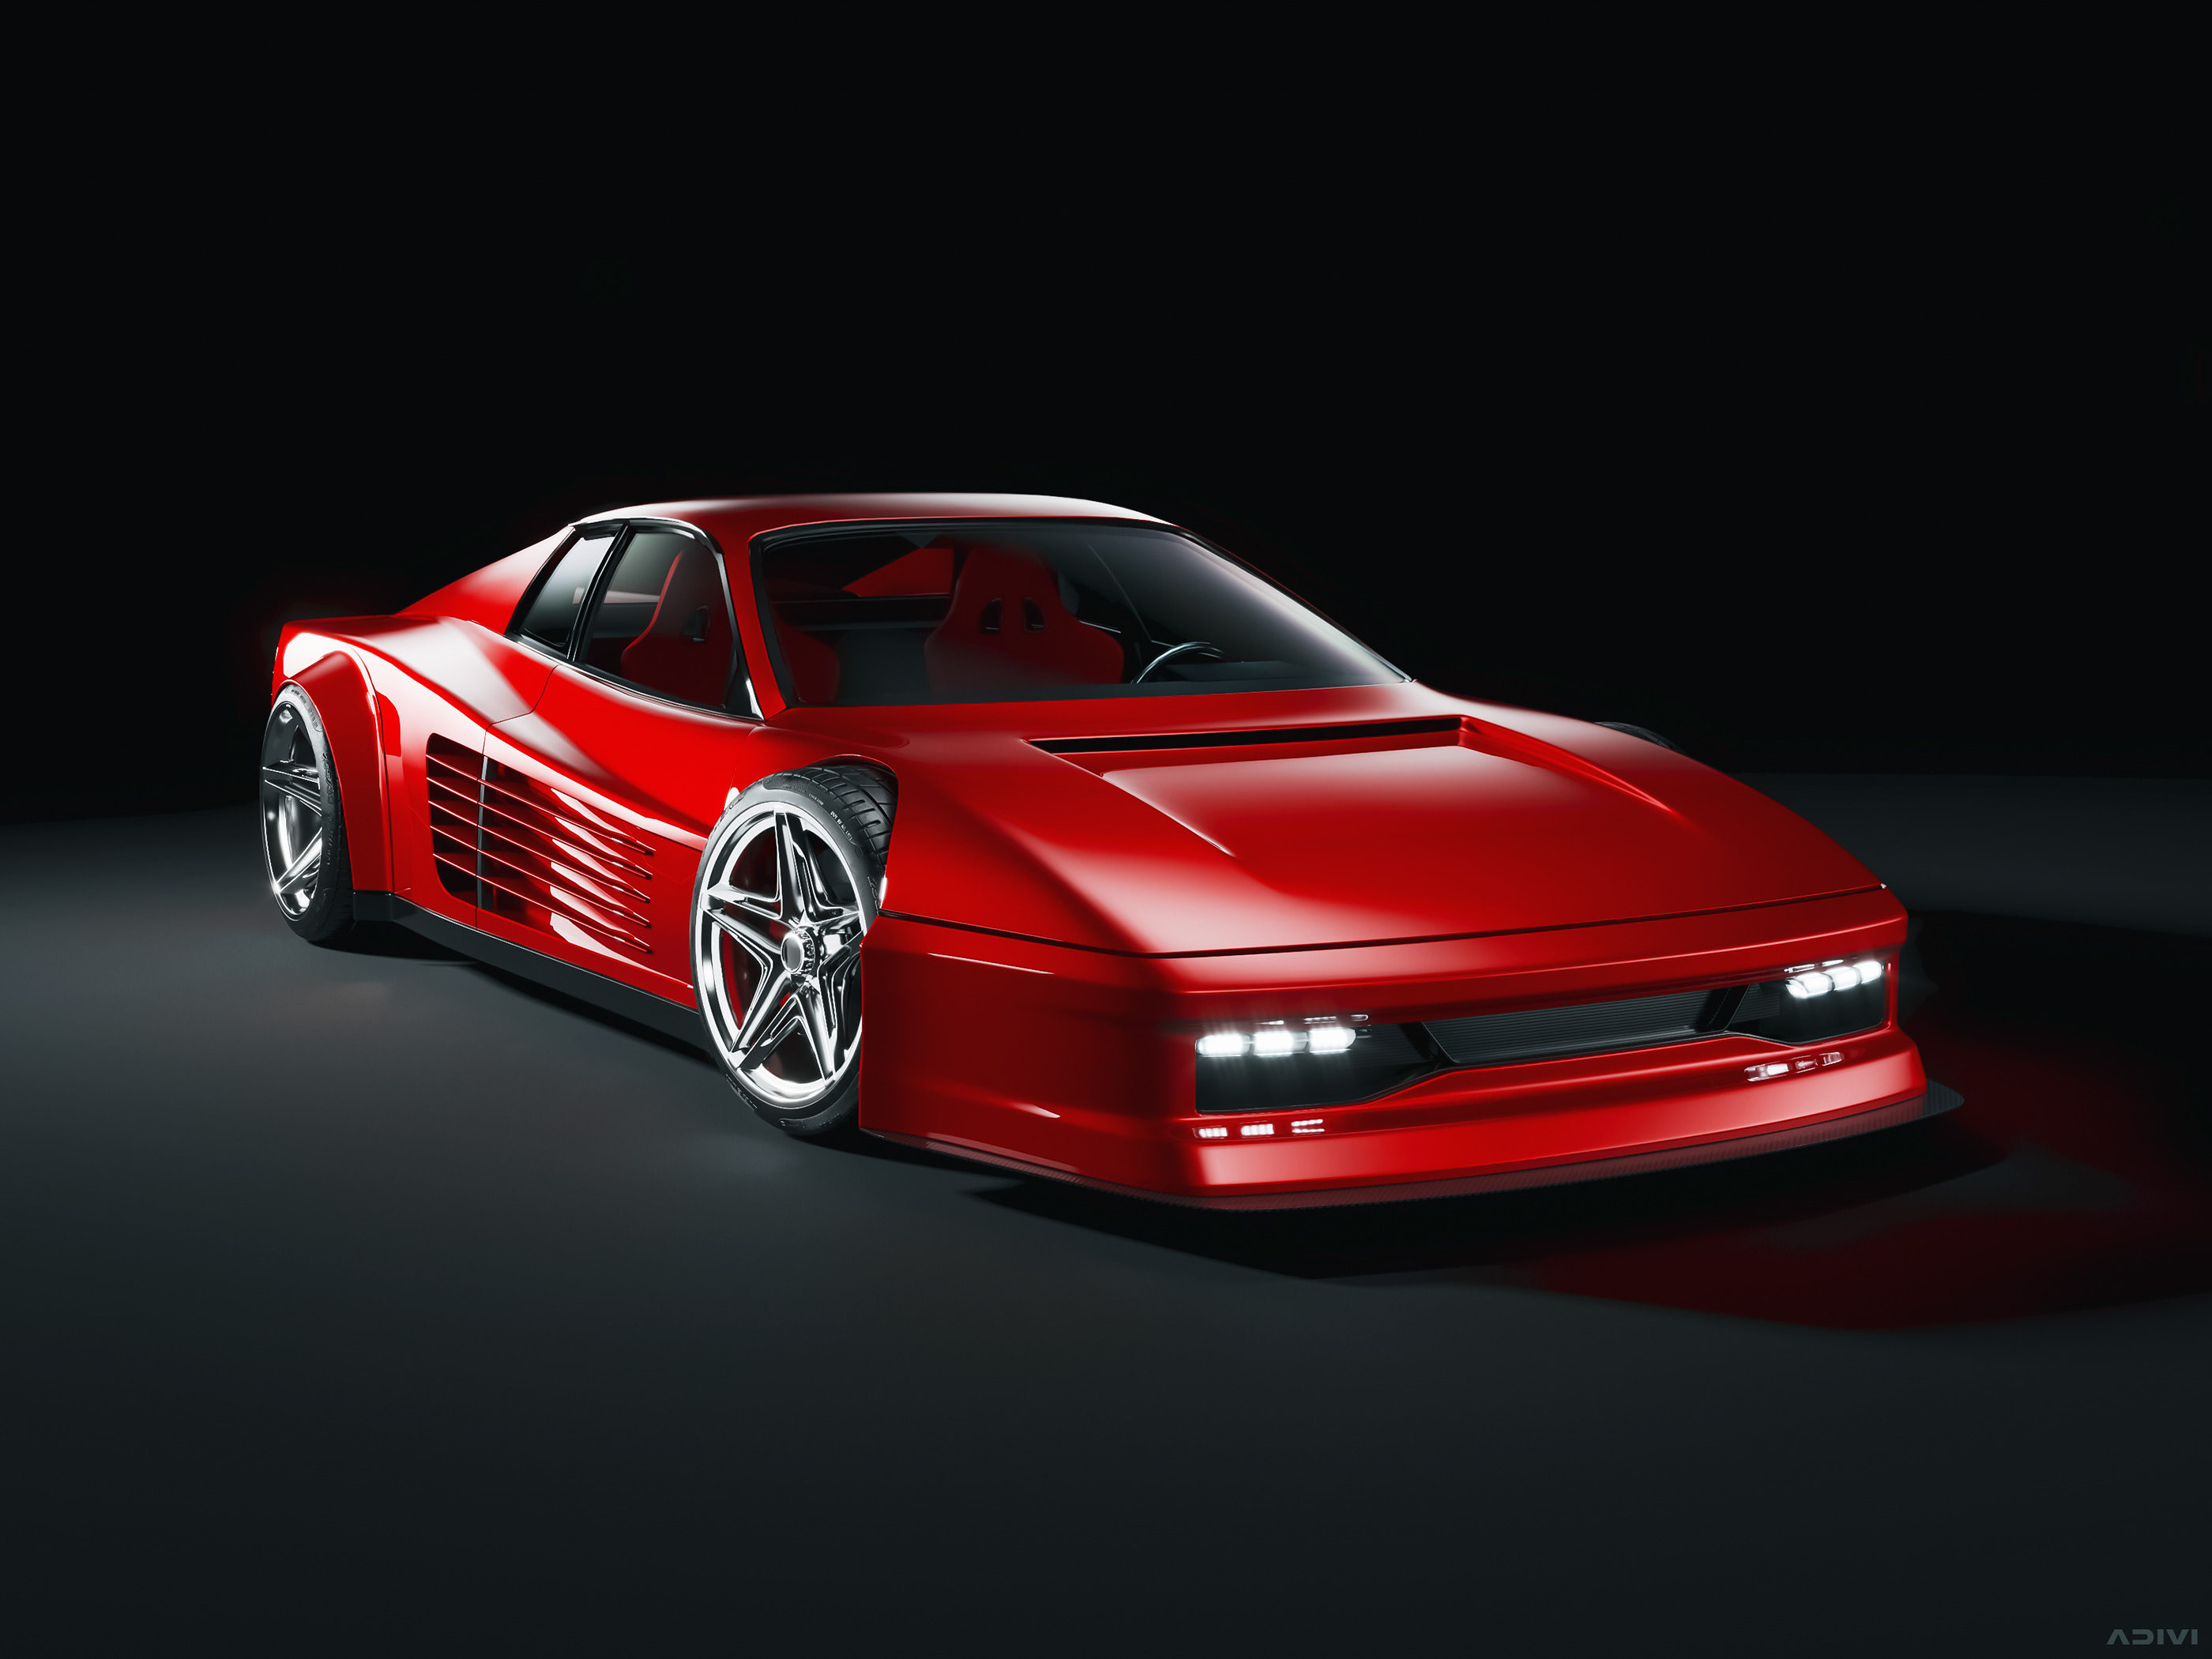 Ferrari Ferrari Testarossa Concept Art Concept Cars Digital Art Digital Render Artwork Red Cars Car  2800x2100